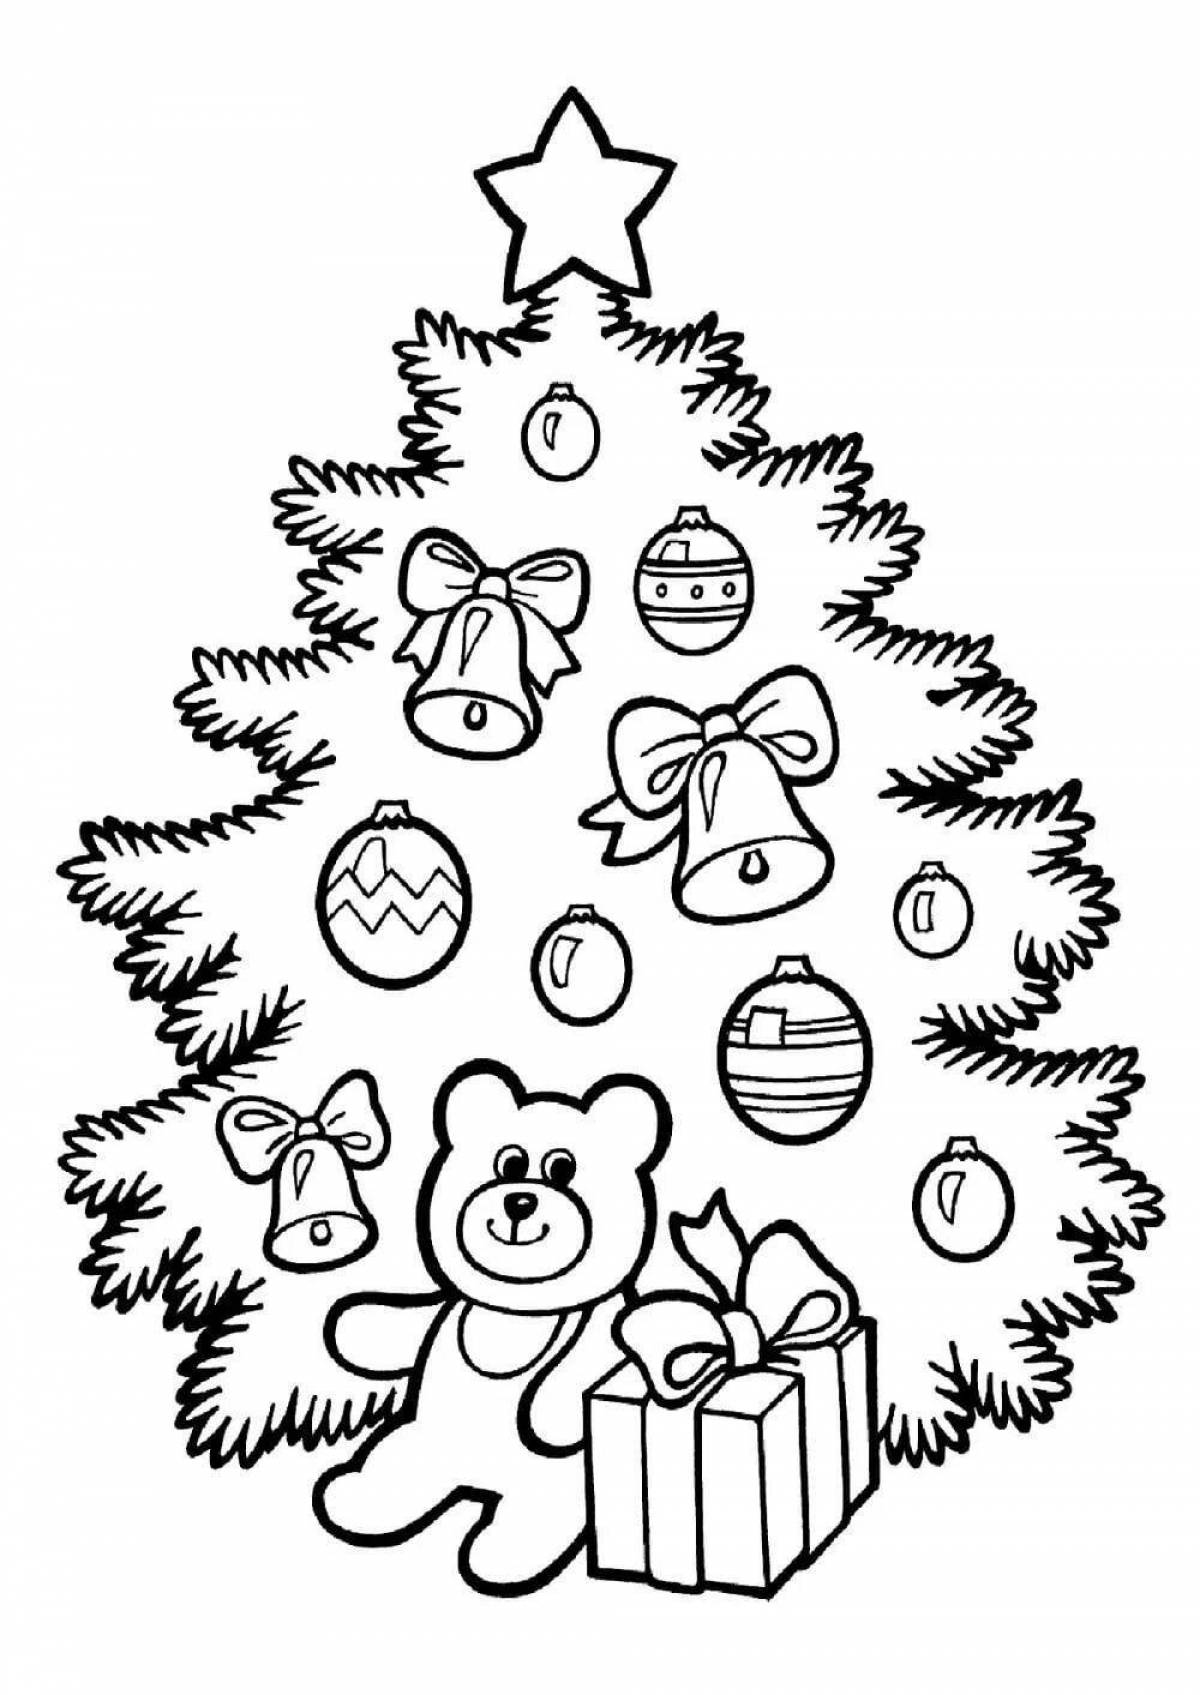 Adorable Christmas tree pattern